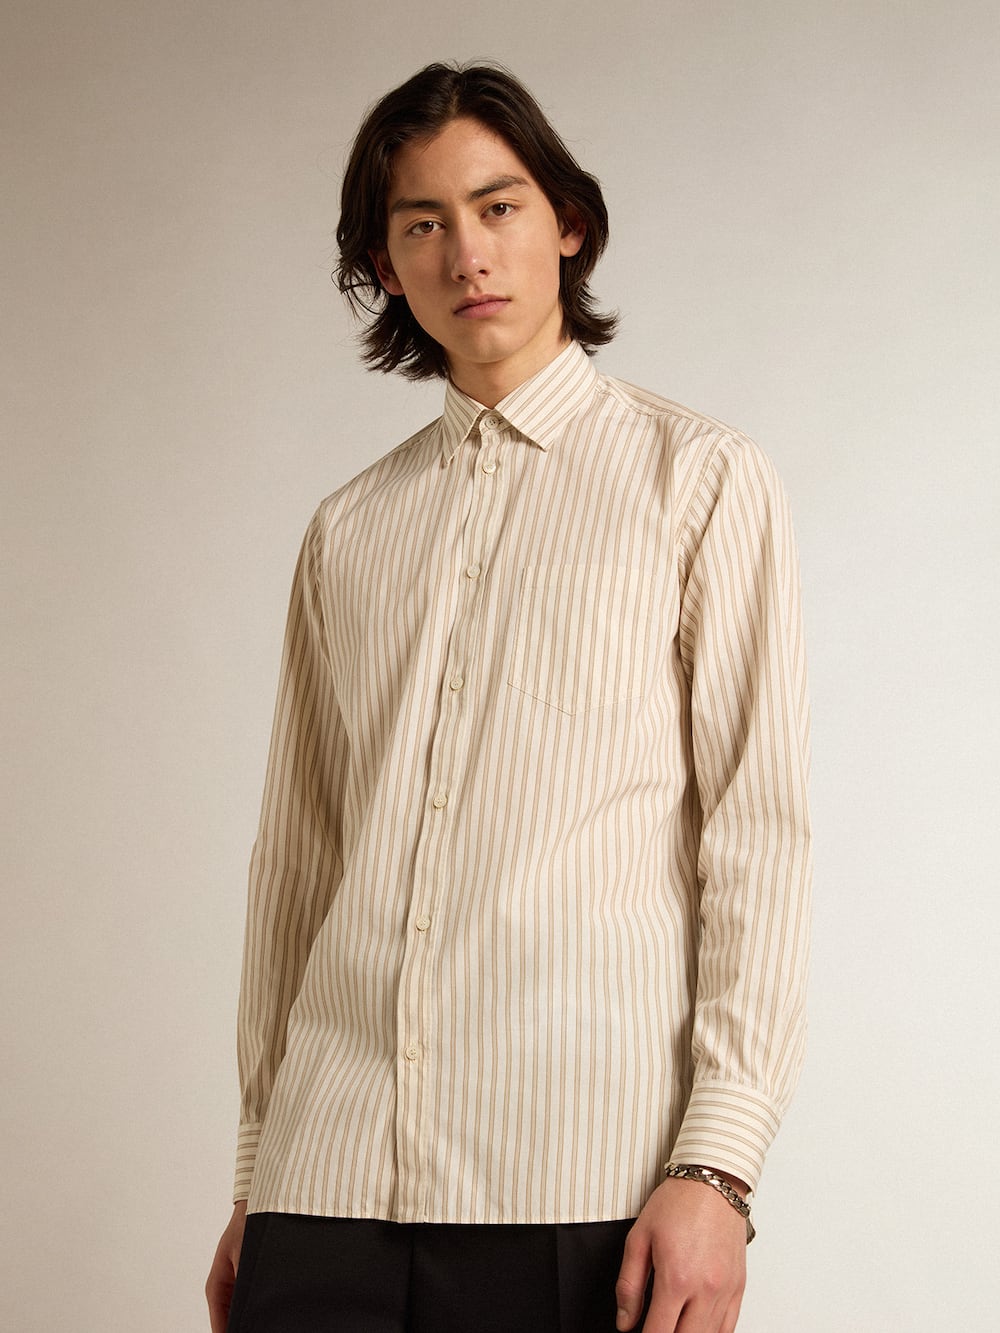 Golden Goose - Men’s white cotton shirt with beige stripes in 